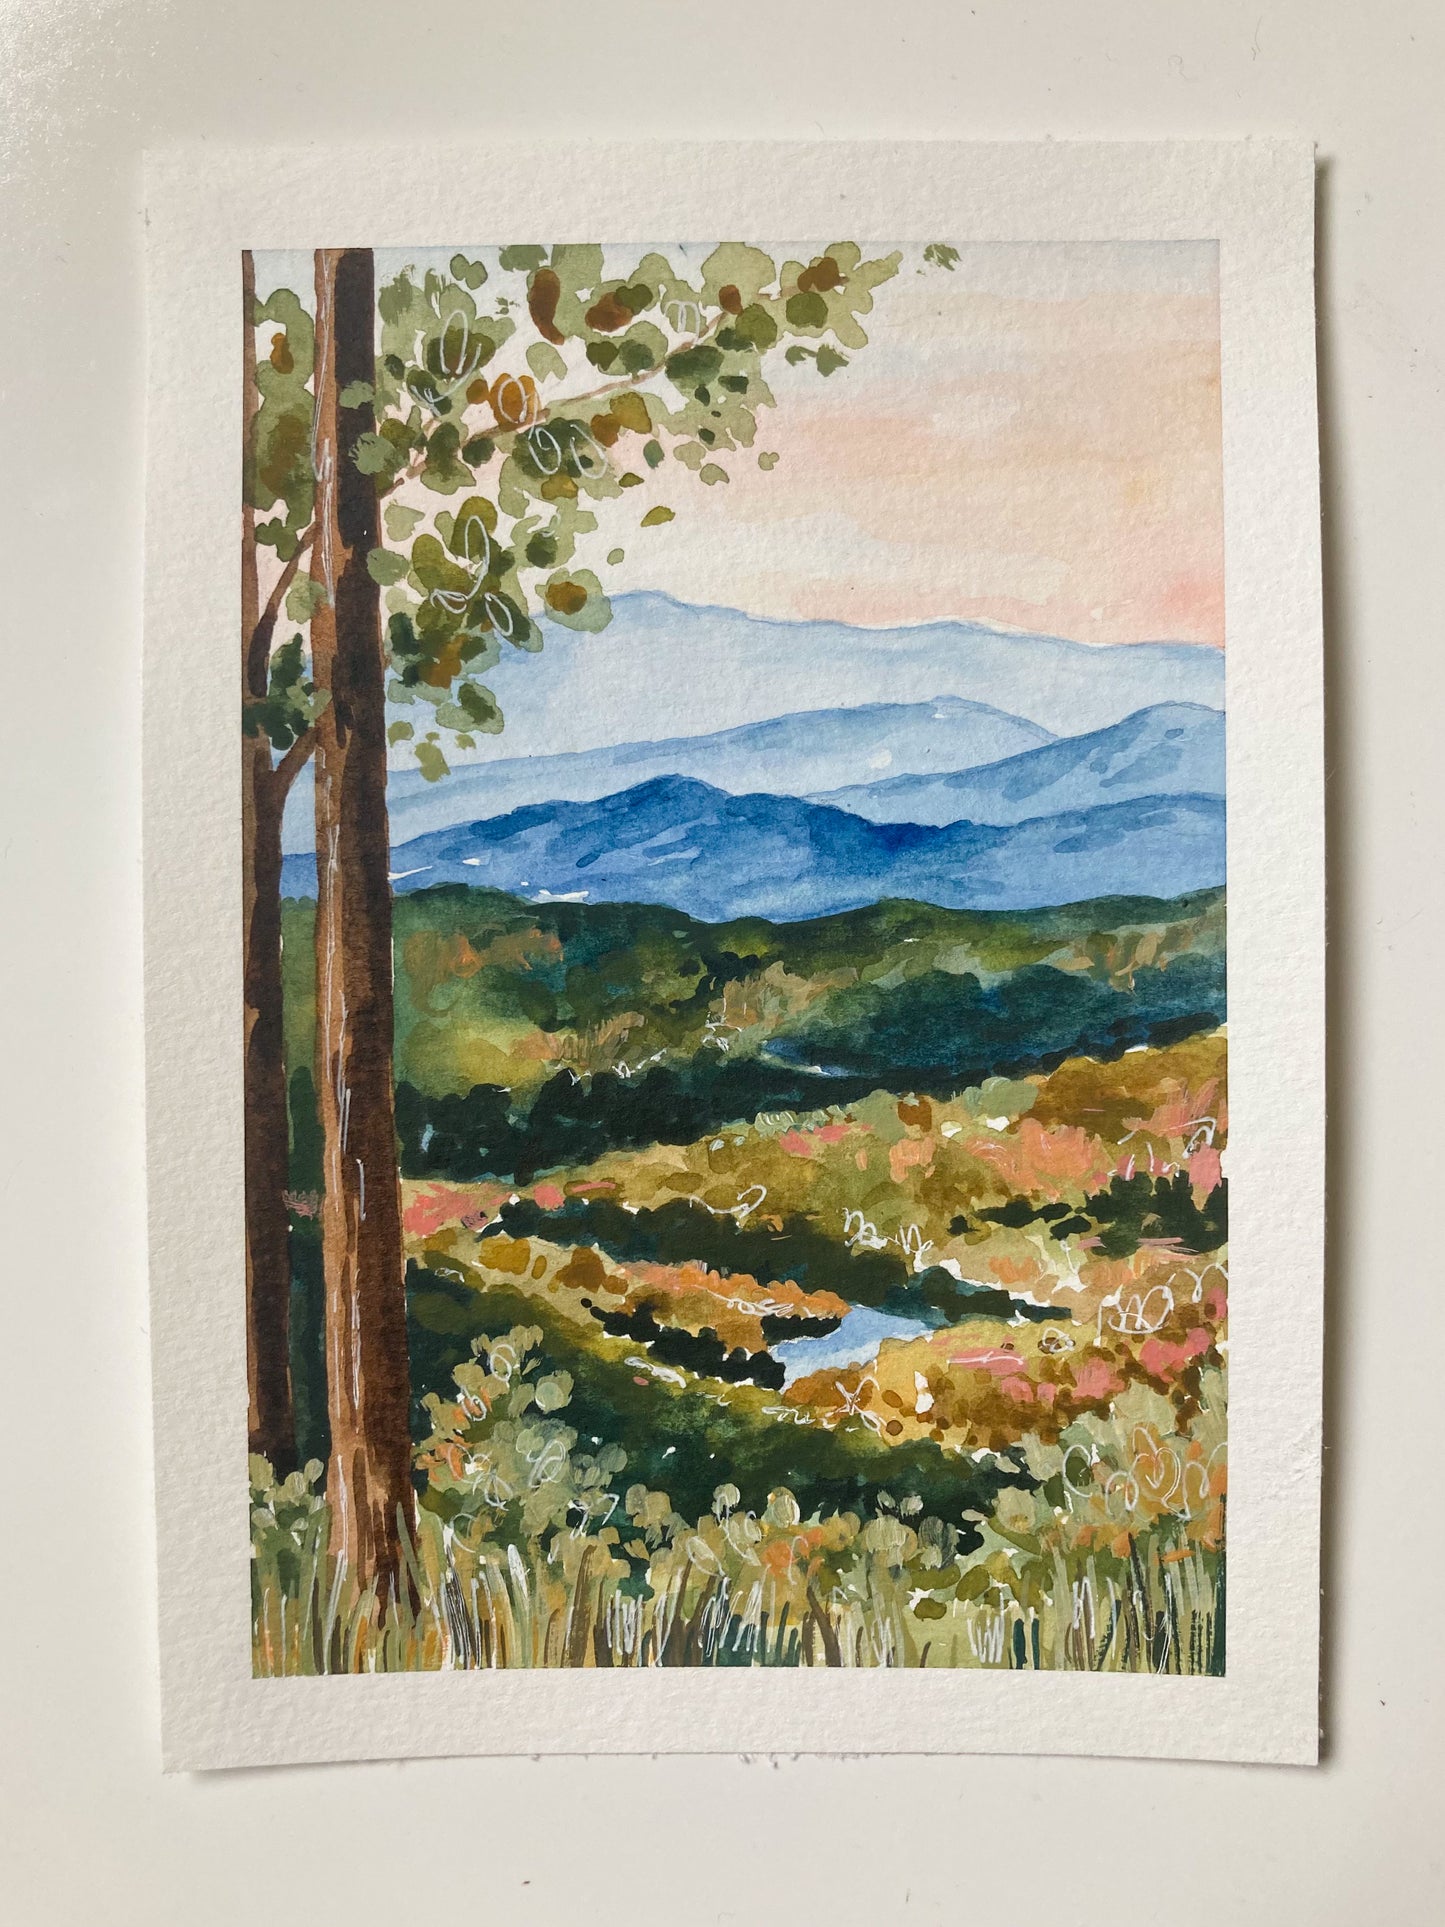 Blue Ridge Mountains Print